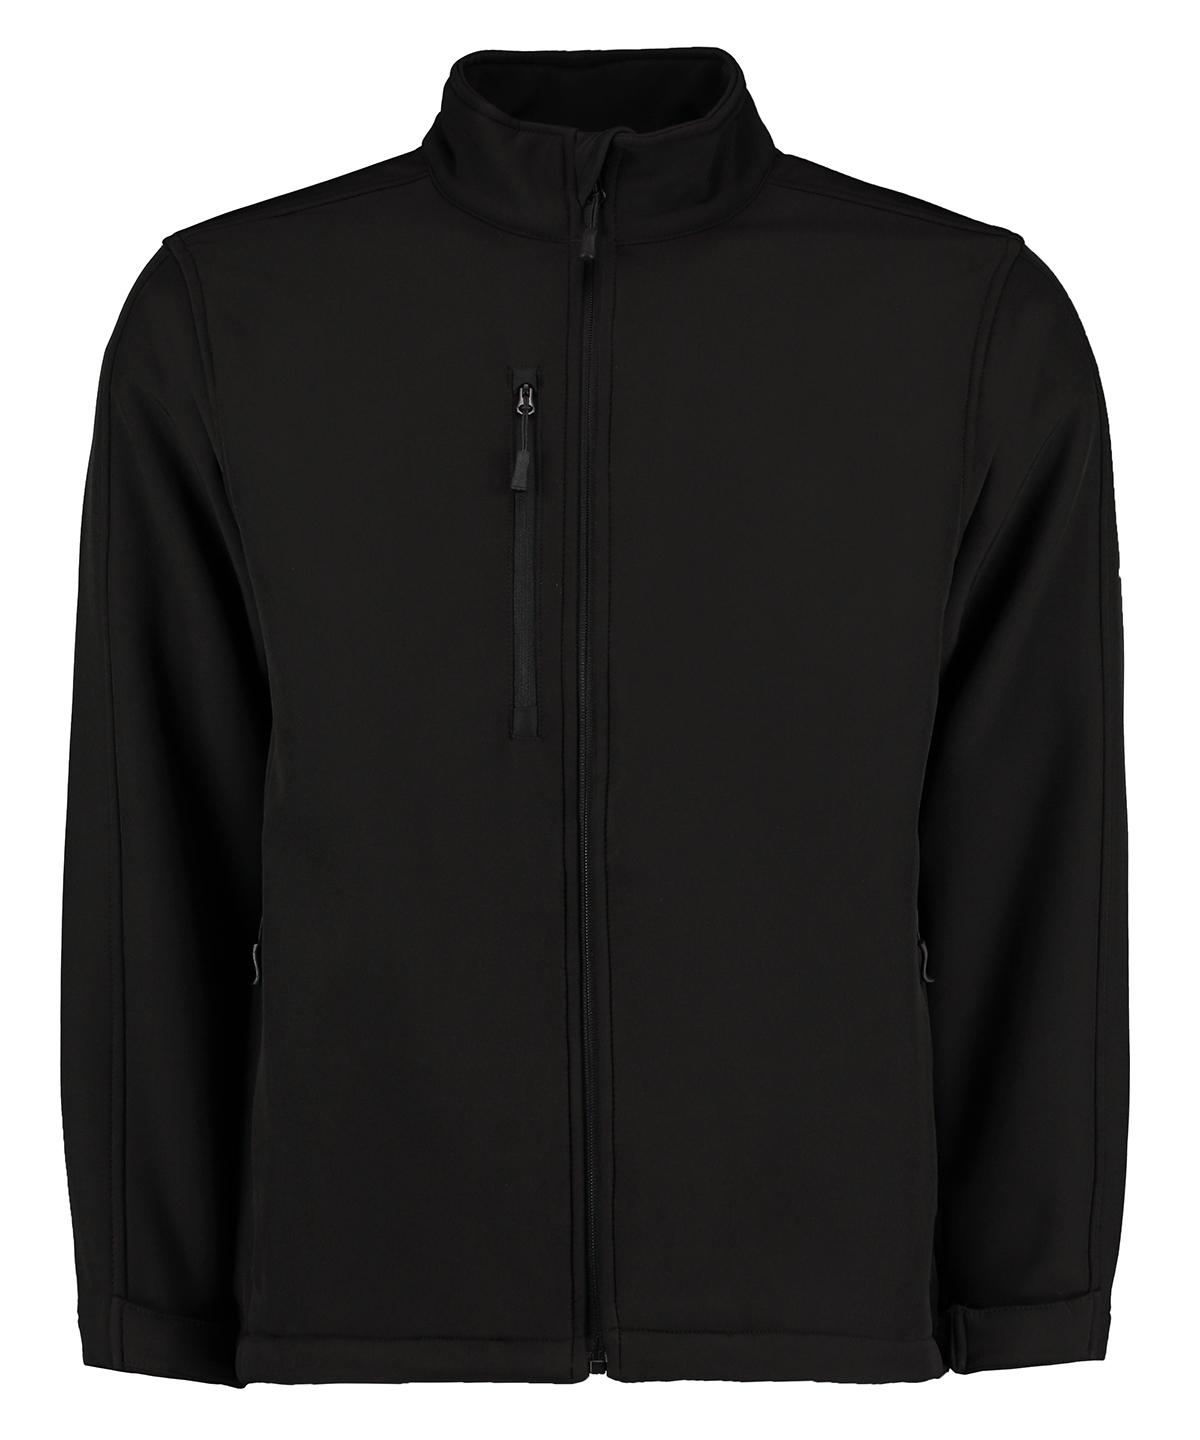 Corporate softshell jacket (regular fit)